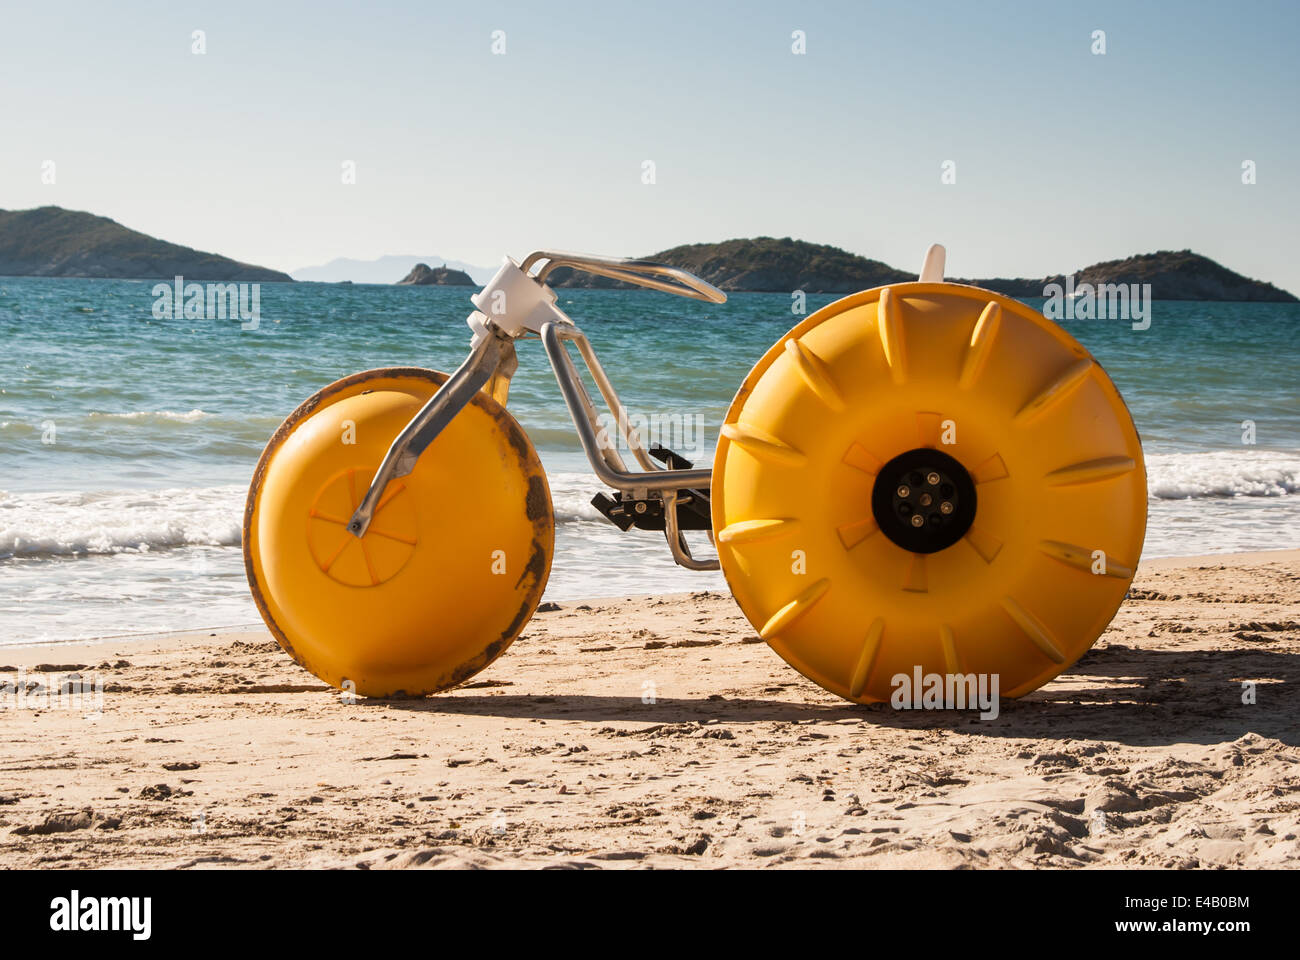 Beach tricycle used by tourists on Mazatlan Mexico beaches Stock Photo